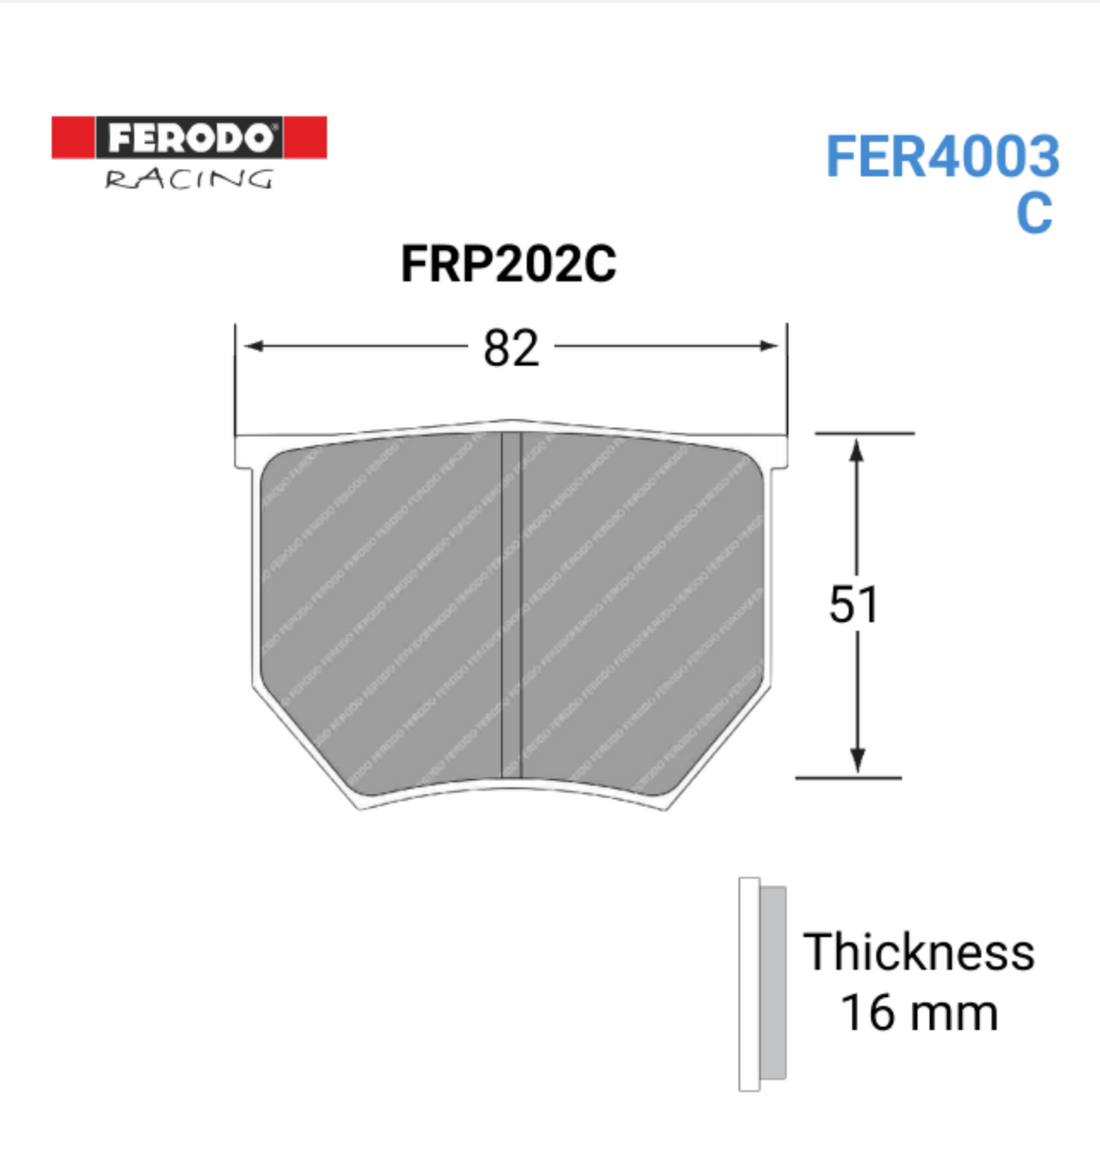 Ferodo FRP202C 4003 Brake Pads